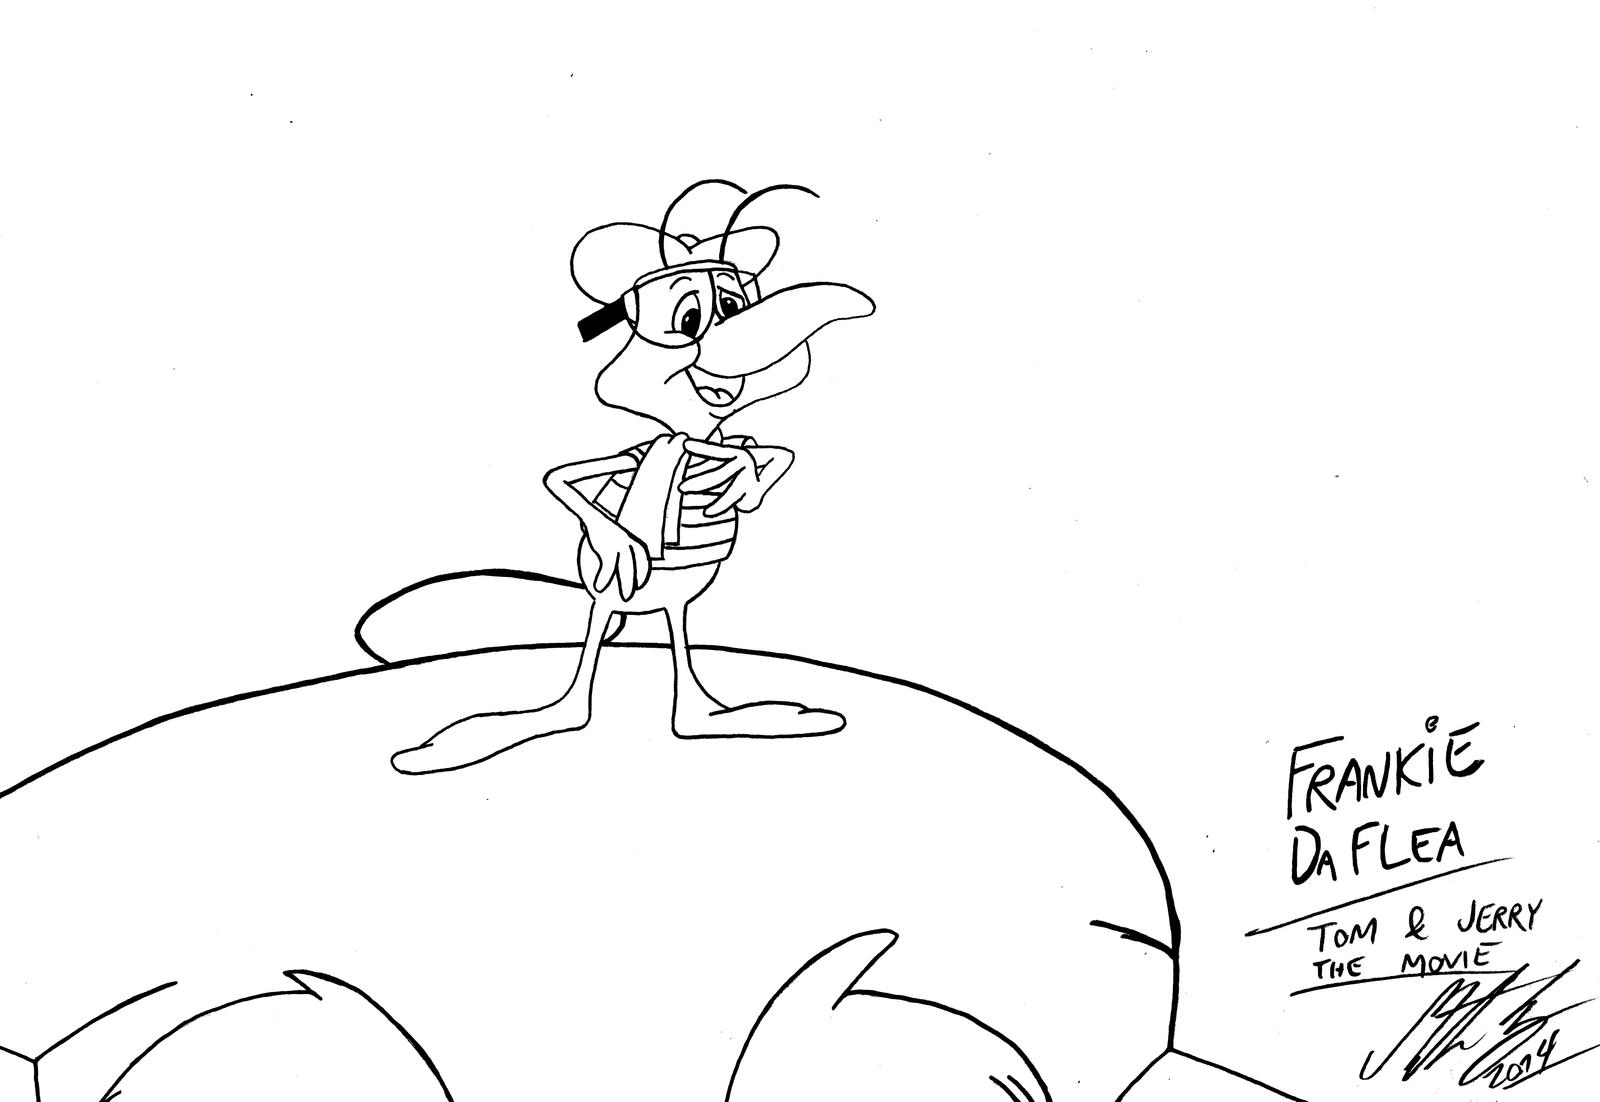 Tom and Jerry the Movie - Frankie DaFlea